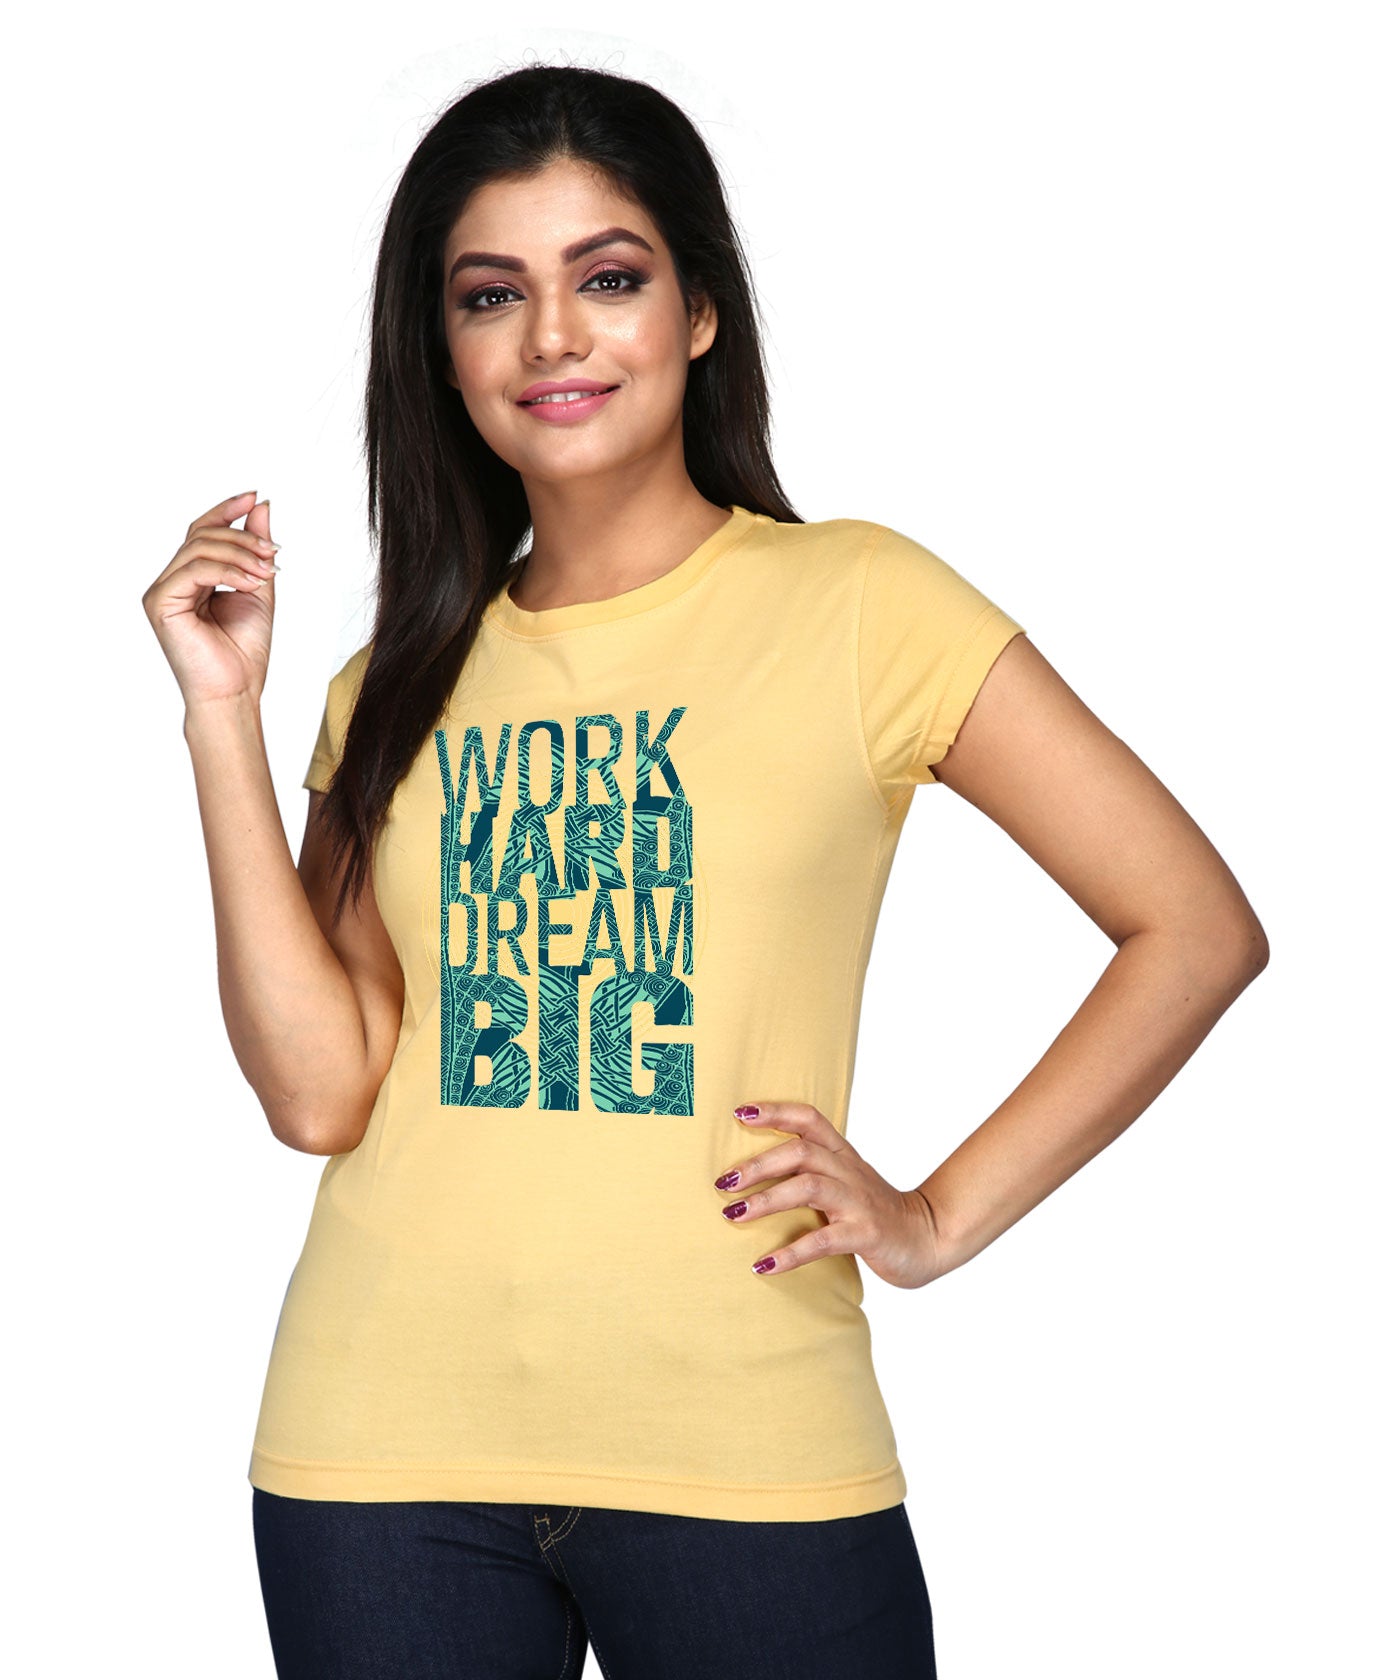 Work Hard Dream Big - Block Print Tees for Women - Golden Yellow